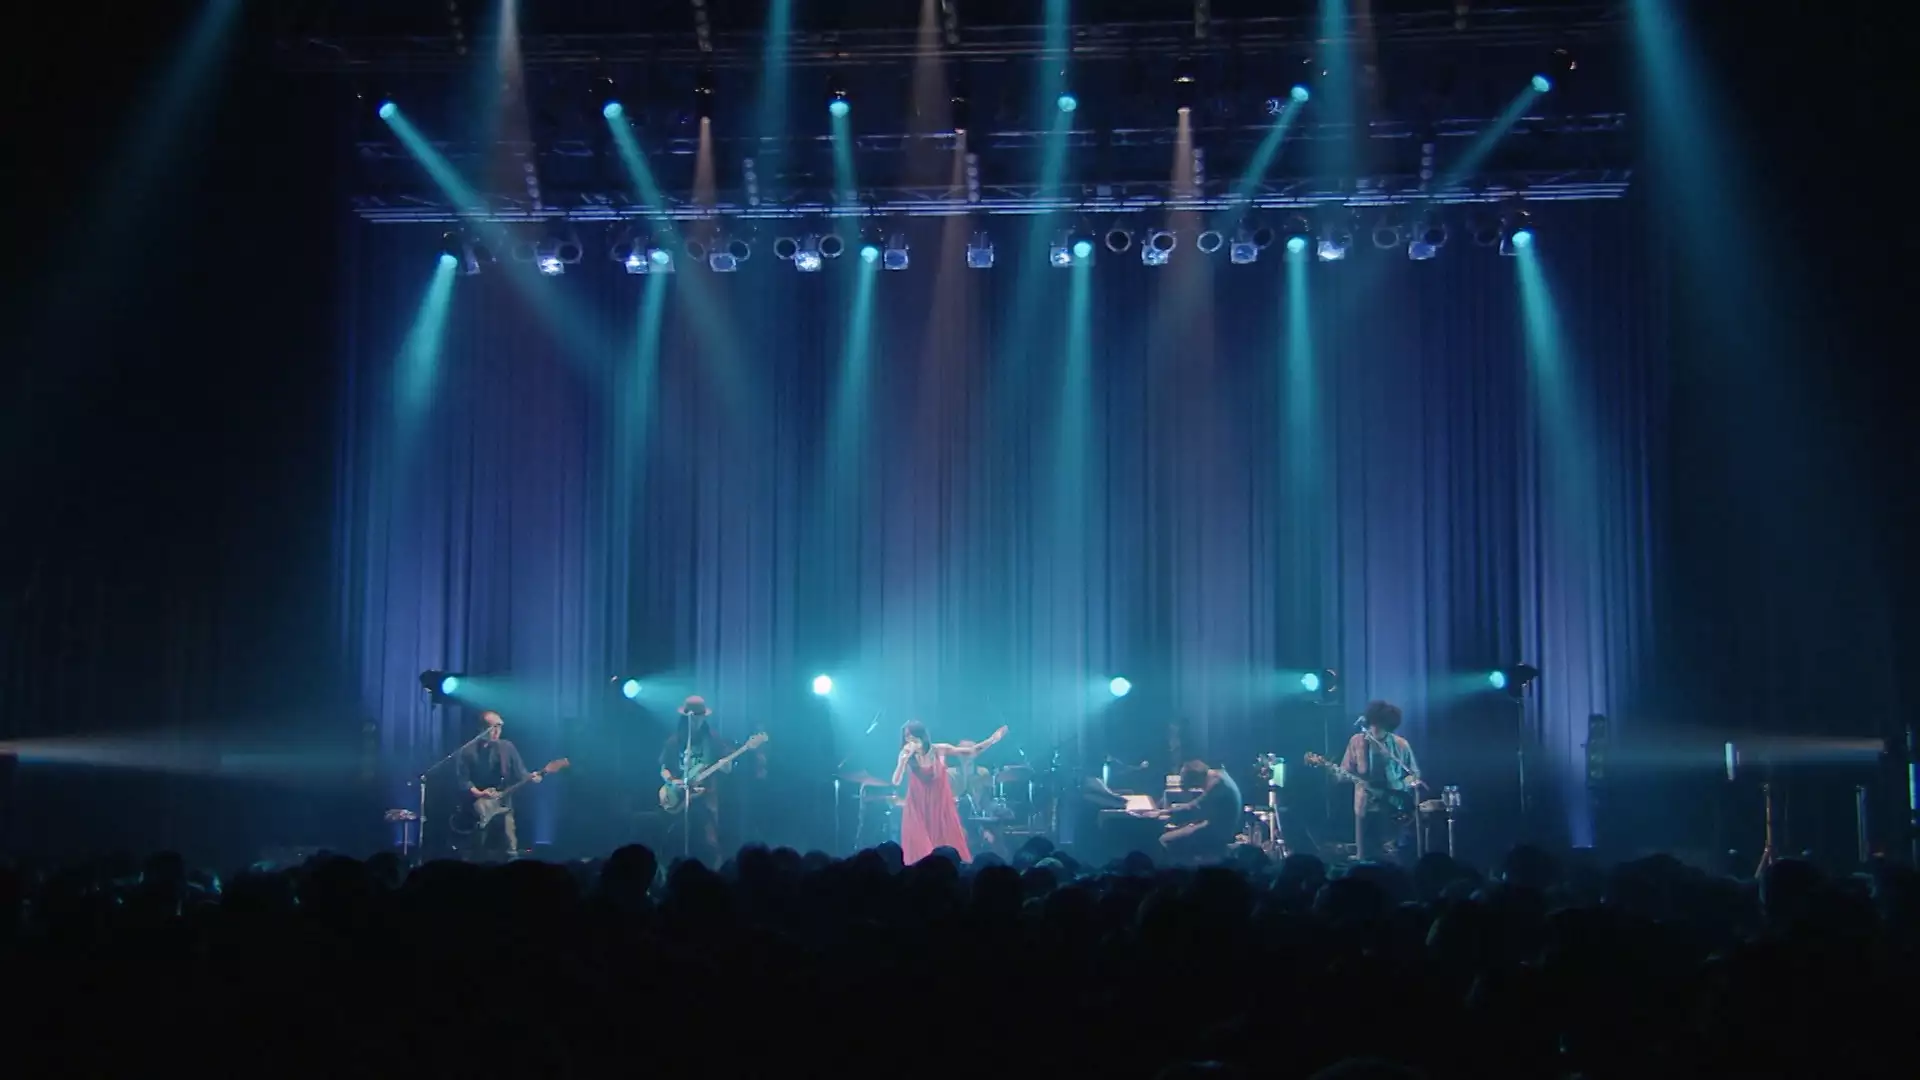 Stardust (エメラルド Tour 2010 Live at Zepp Tokyo 2010.11.11)